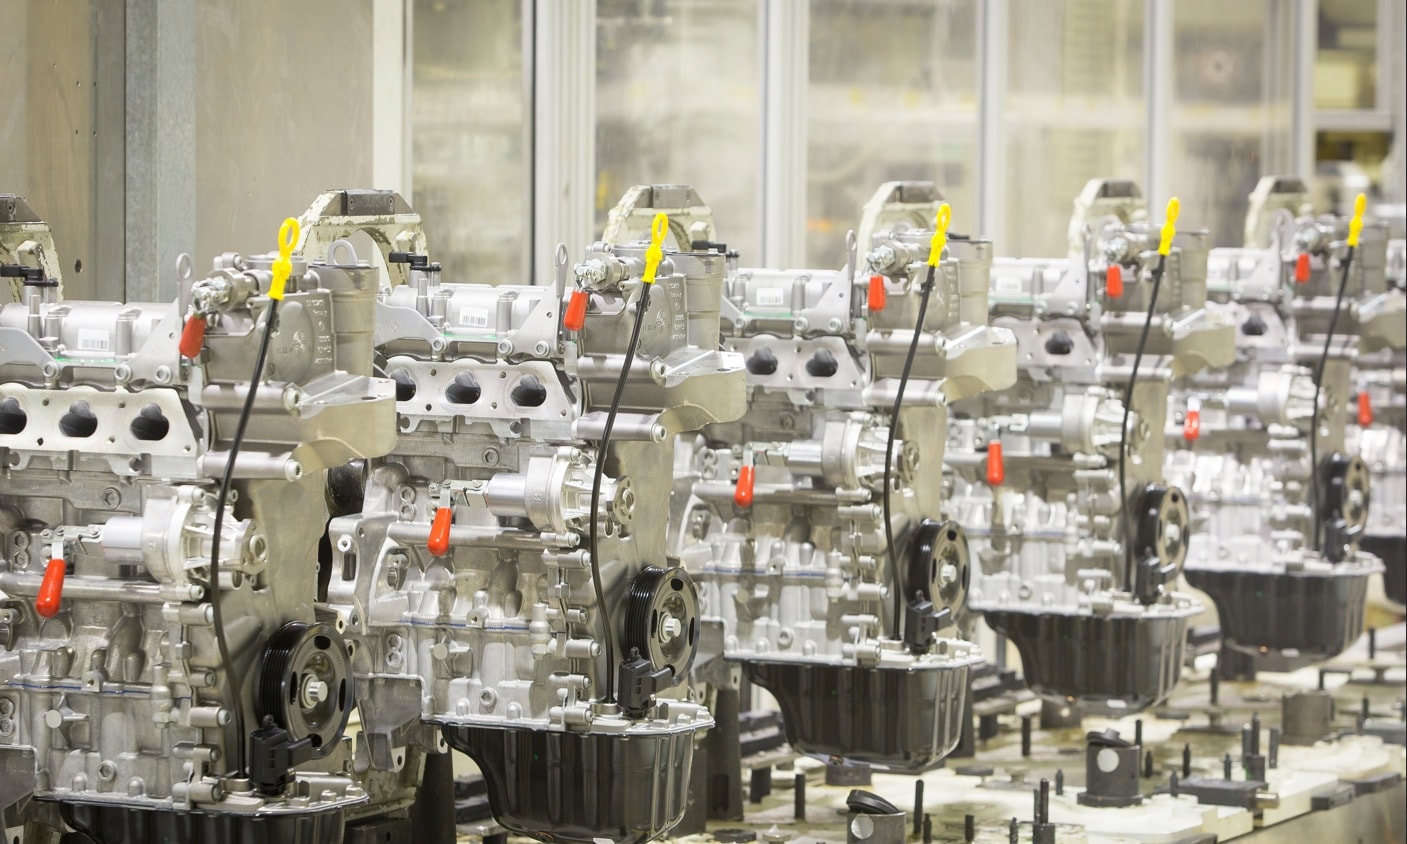 Skoda 1.2 HTP Engine Production Reaches 3 Million Units - autoevolution